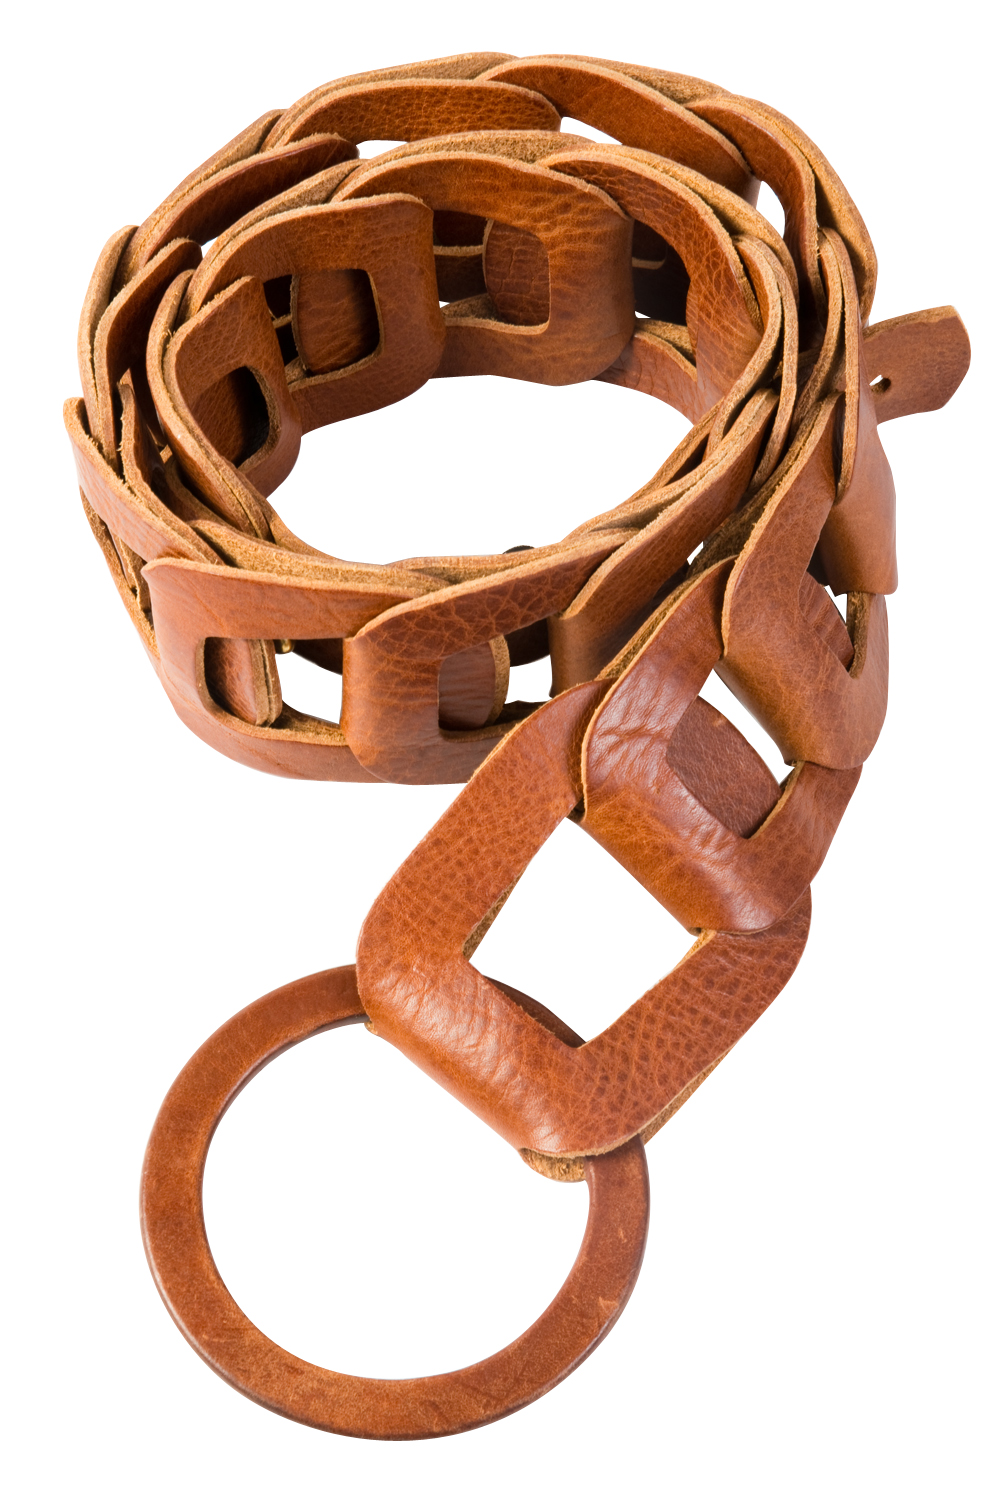 Brave leather link belt in cognac, $110 at Lori + Lulu